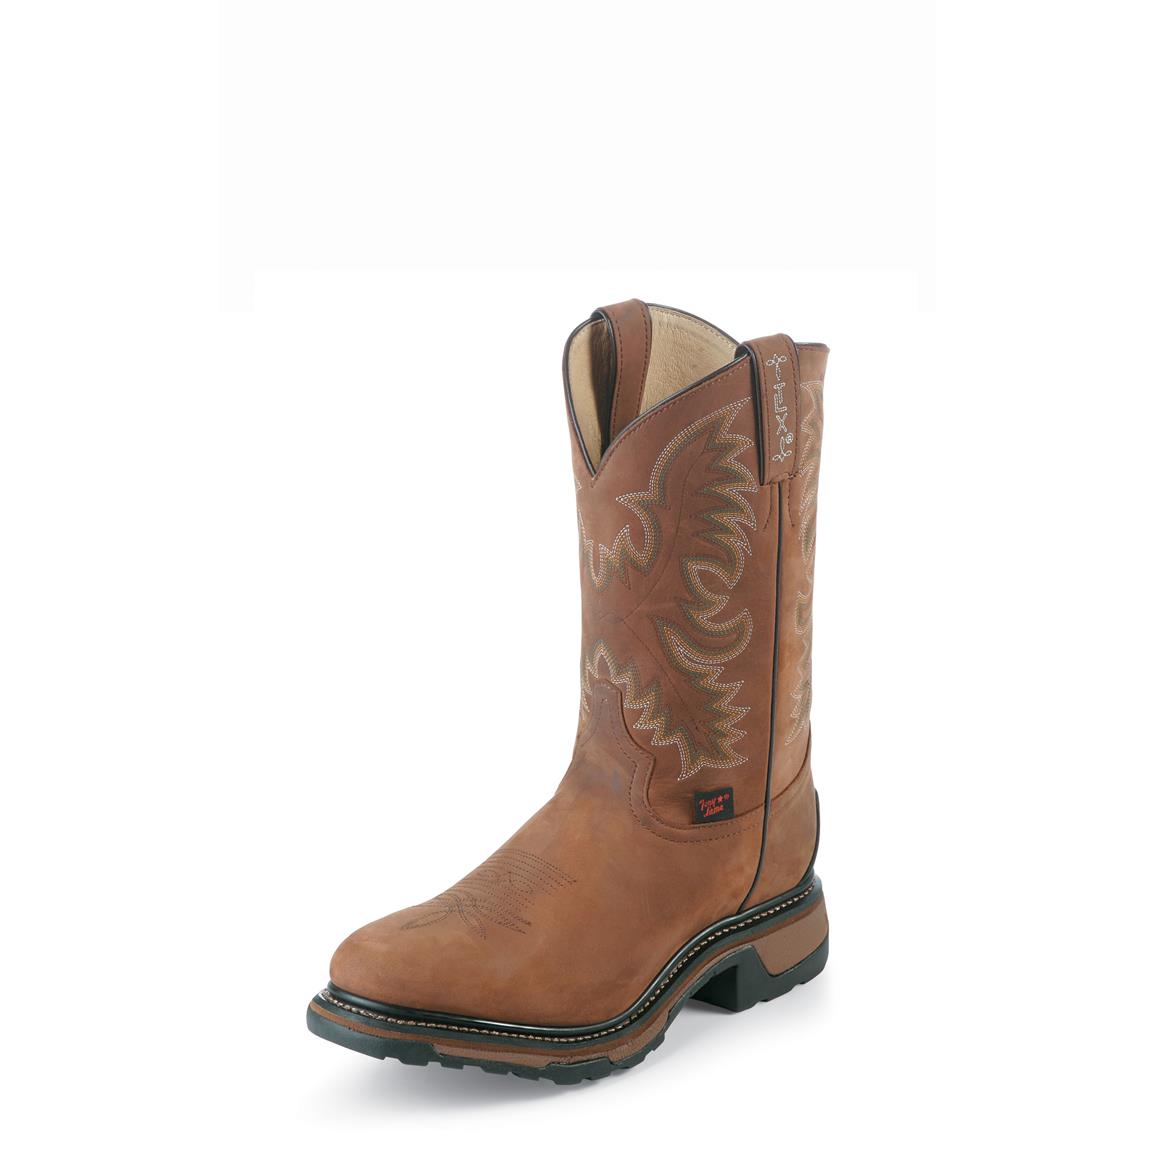 Tony Lama TLX Tan Cheyenne Work Boots, TW1007 - 654902, Cowboy ...